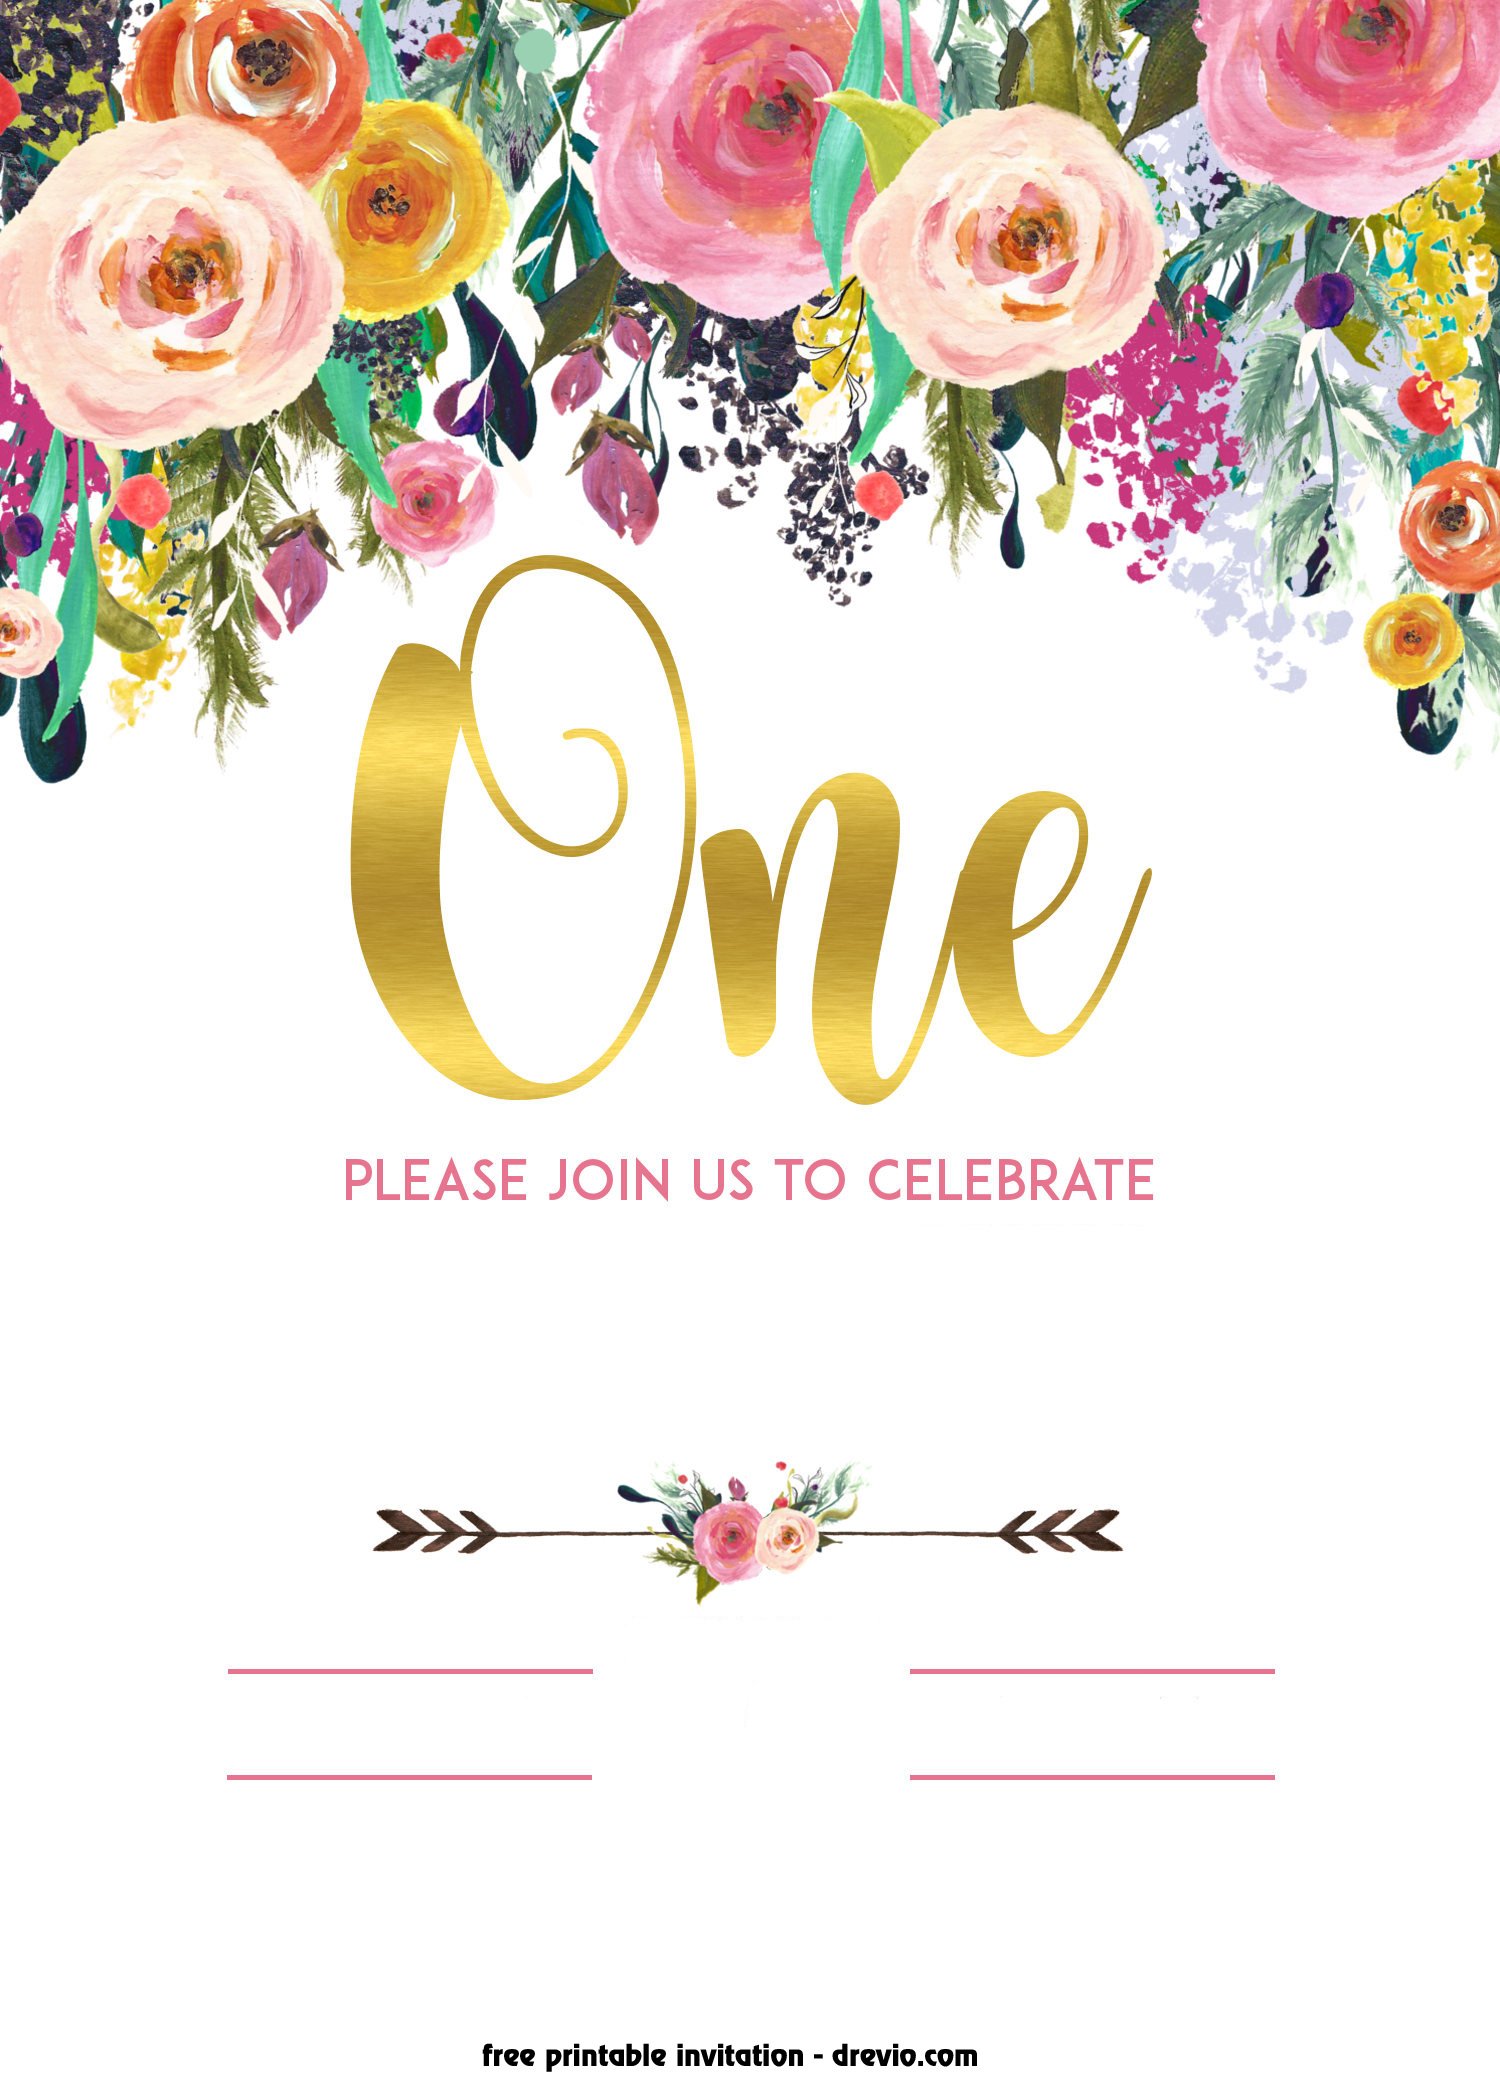 free-online-invitation-template